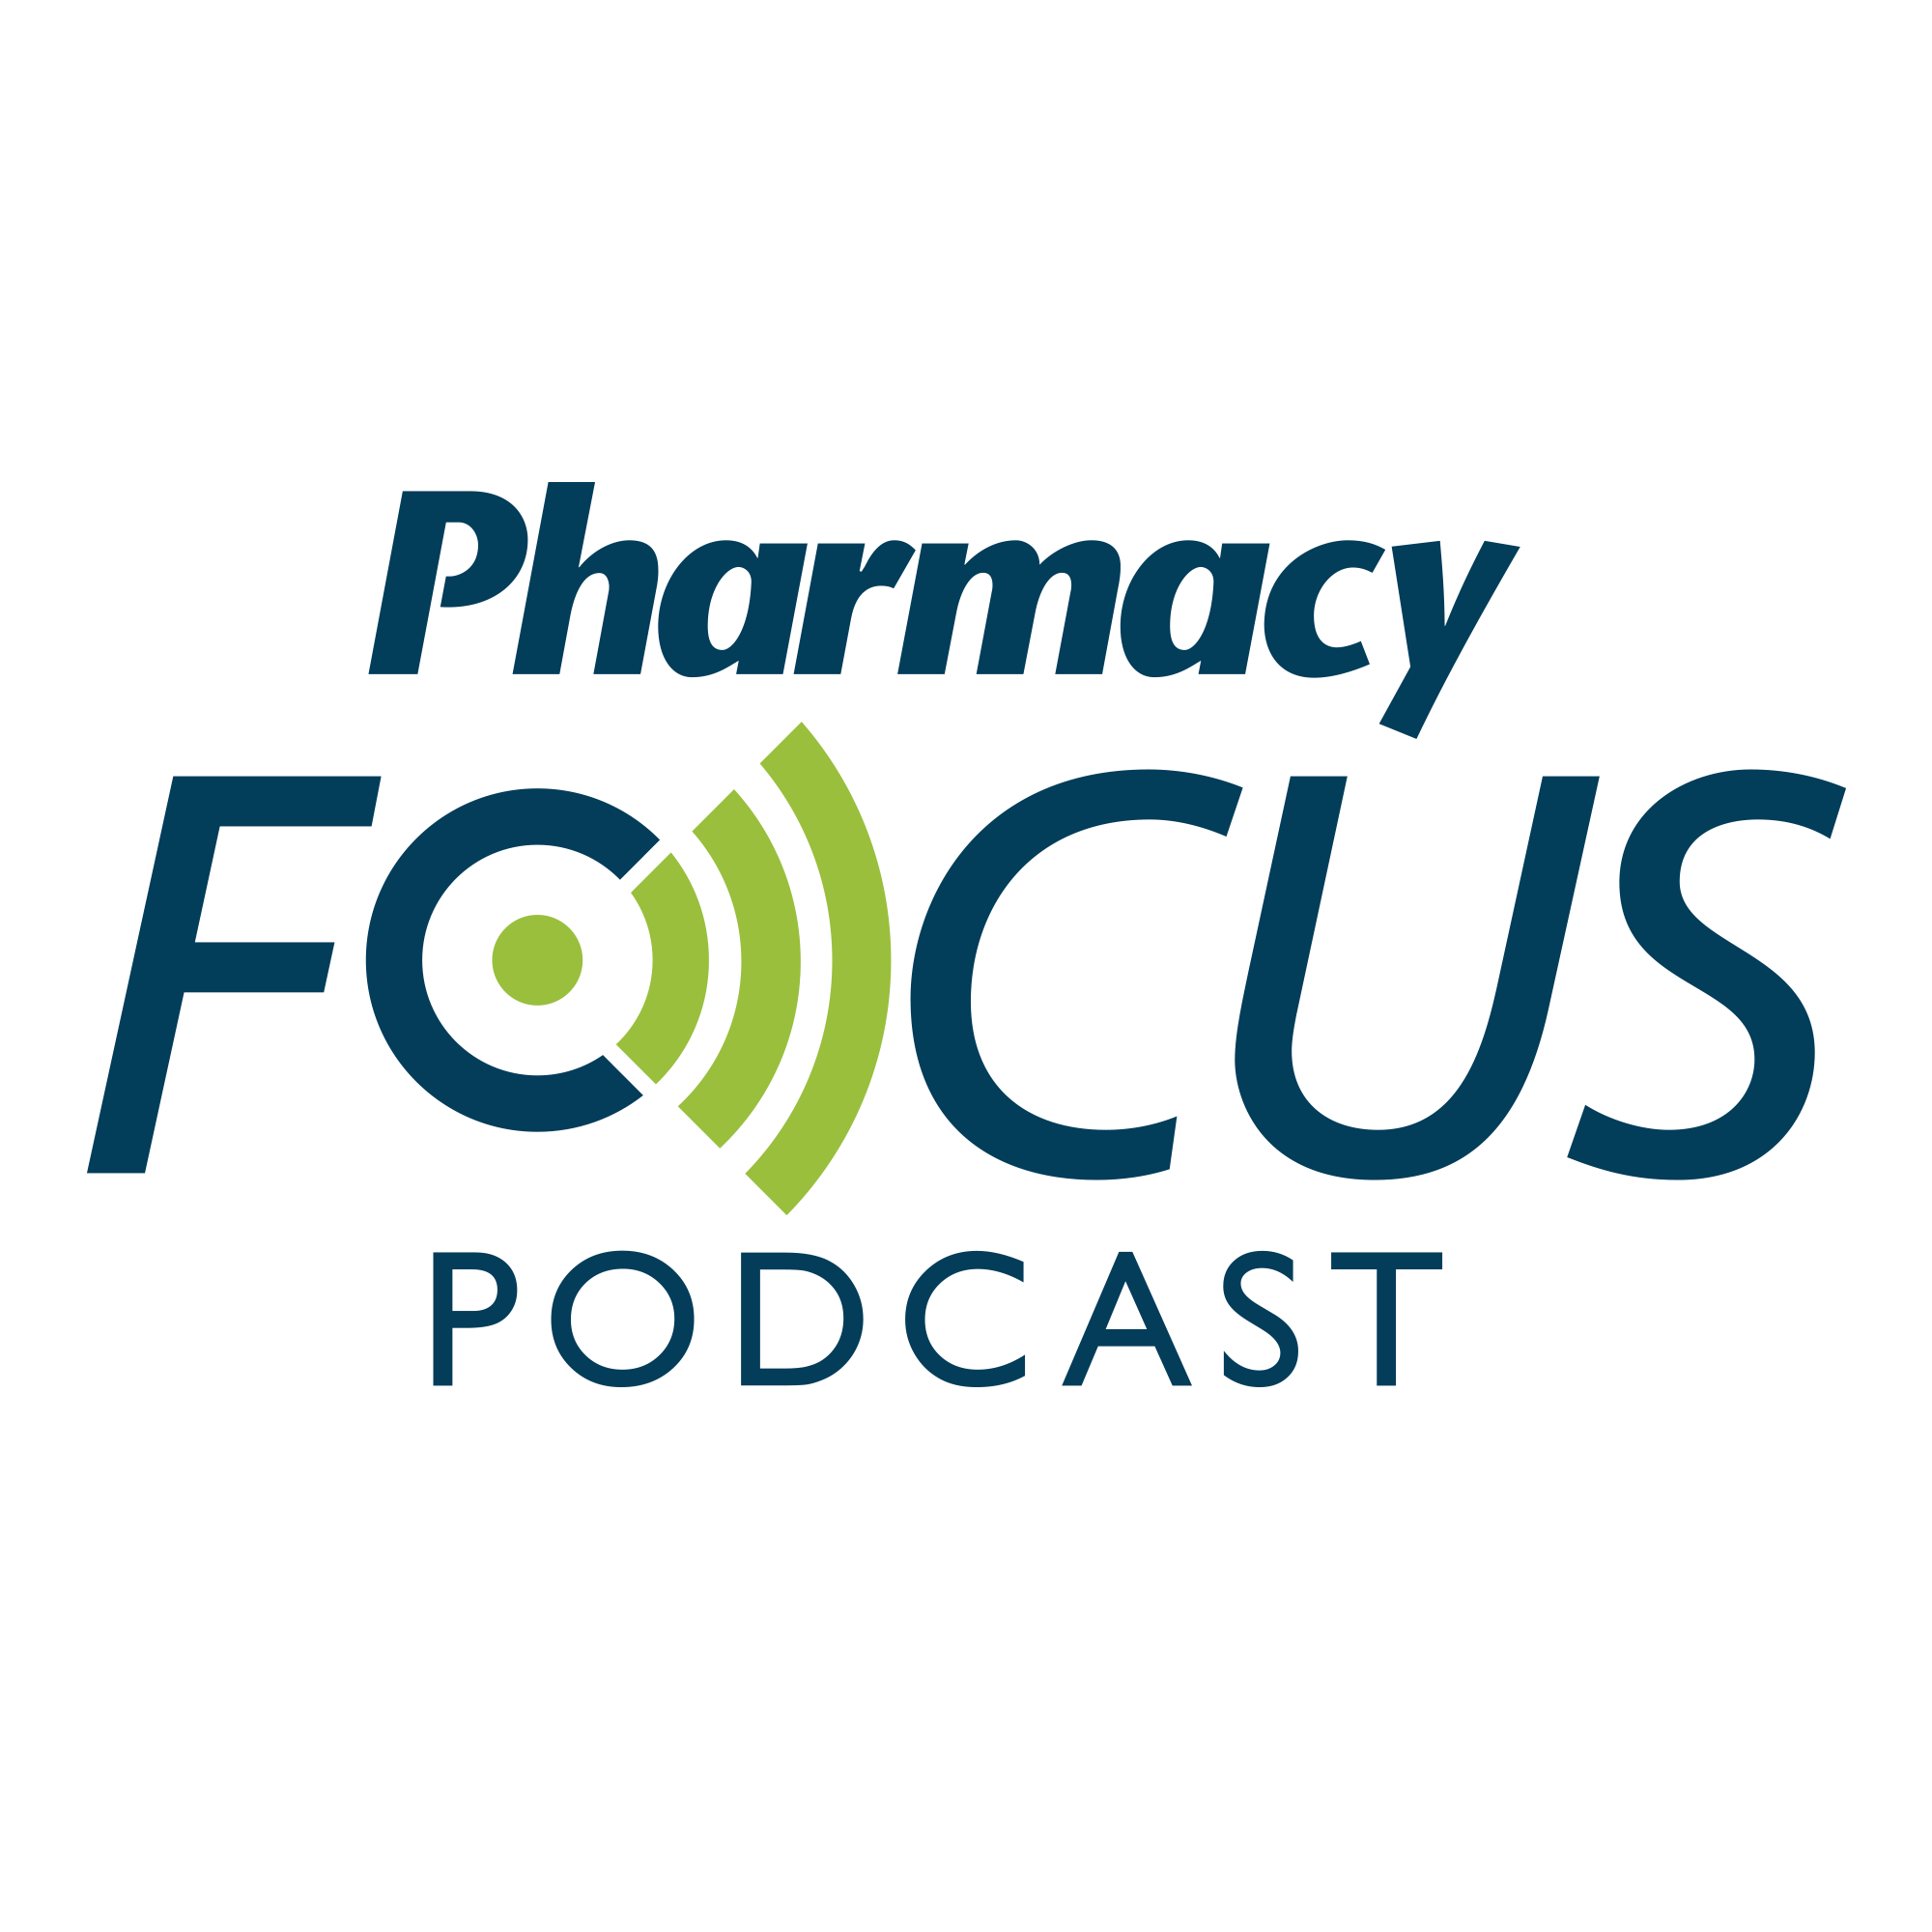 Pharmacy Focus: Turning the Tide On Obesity - Episode 3